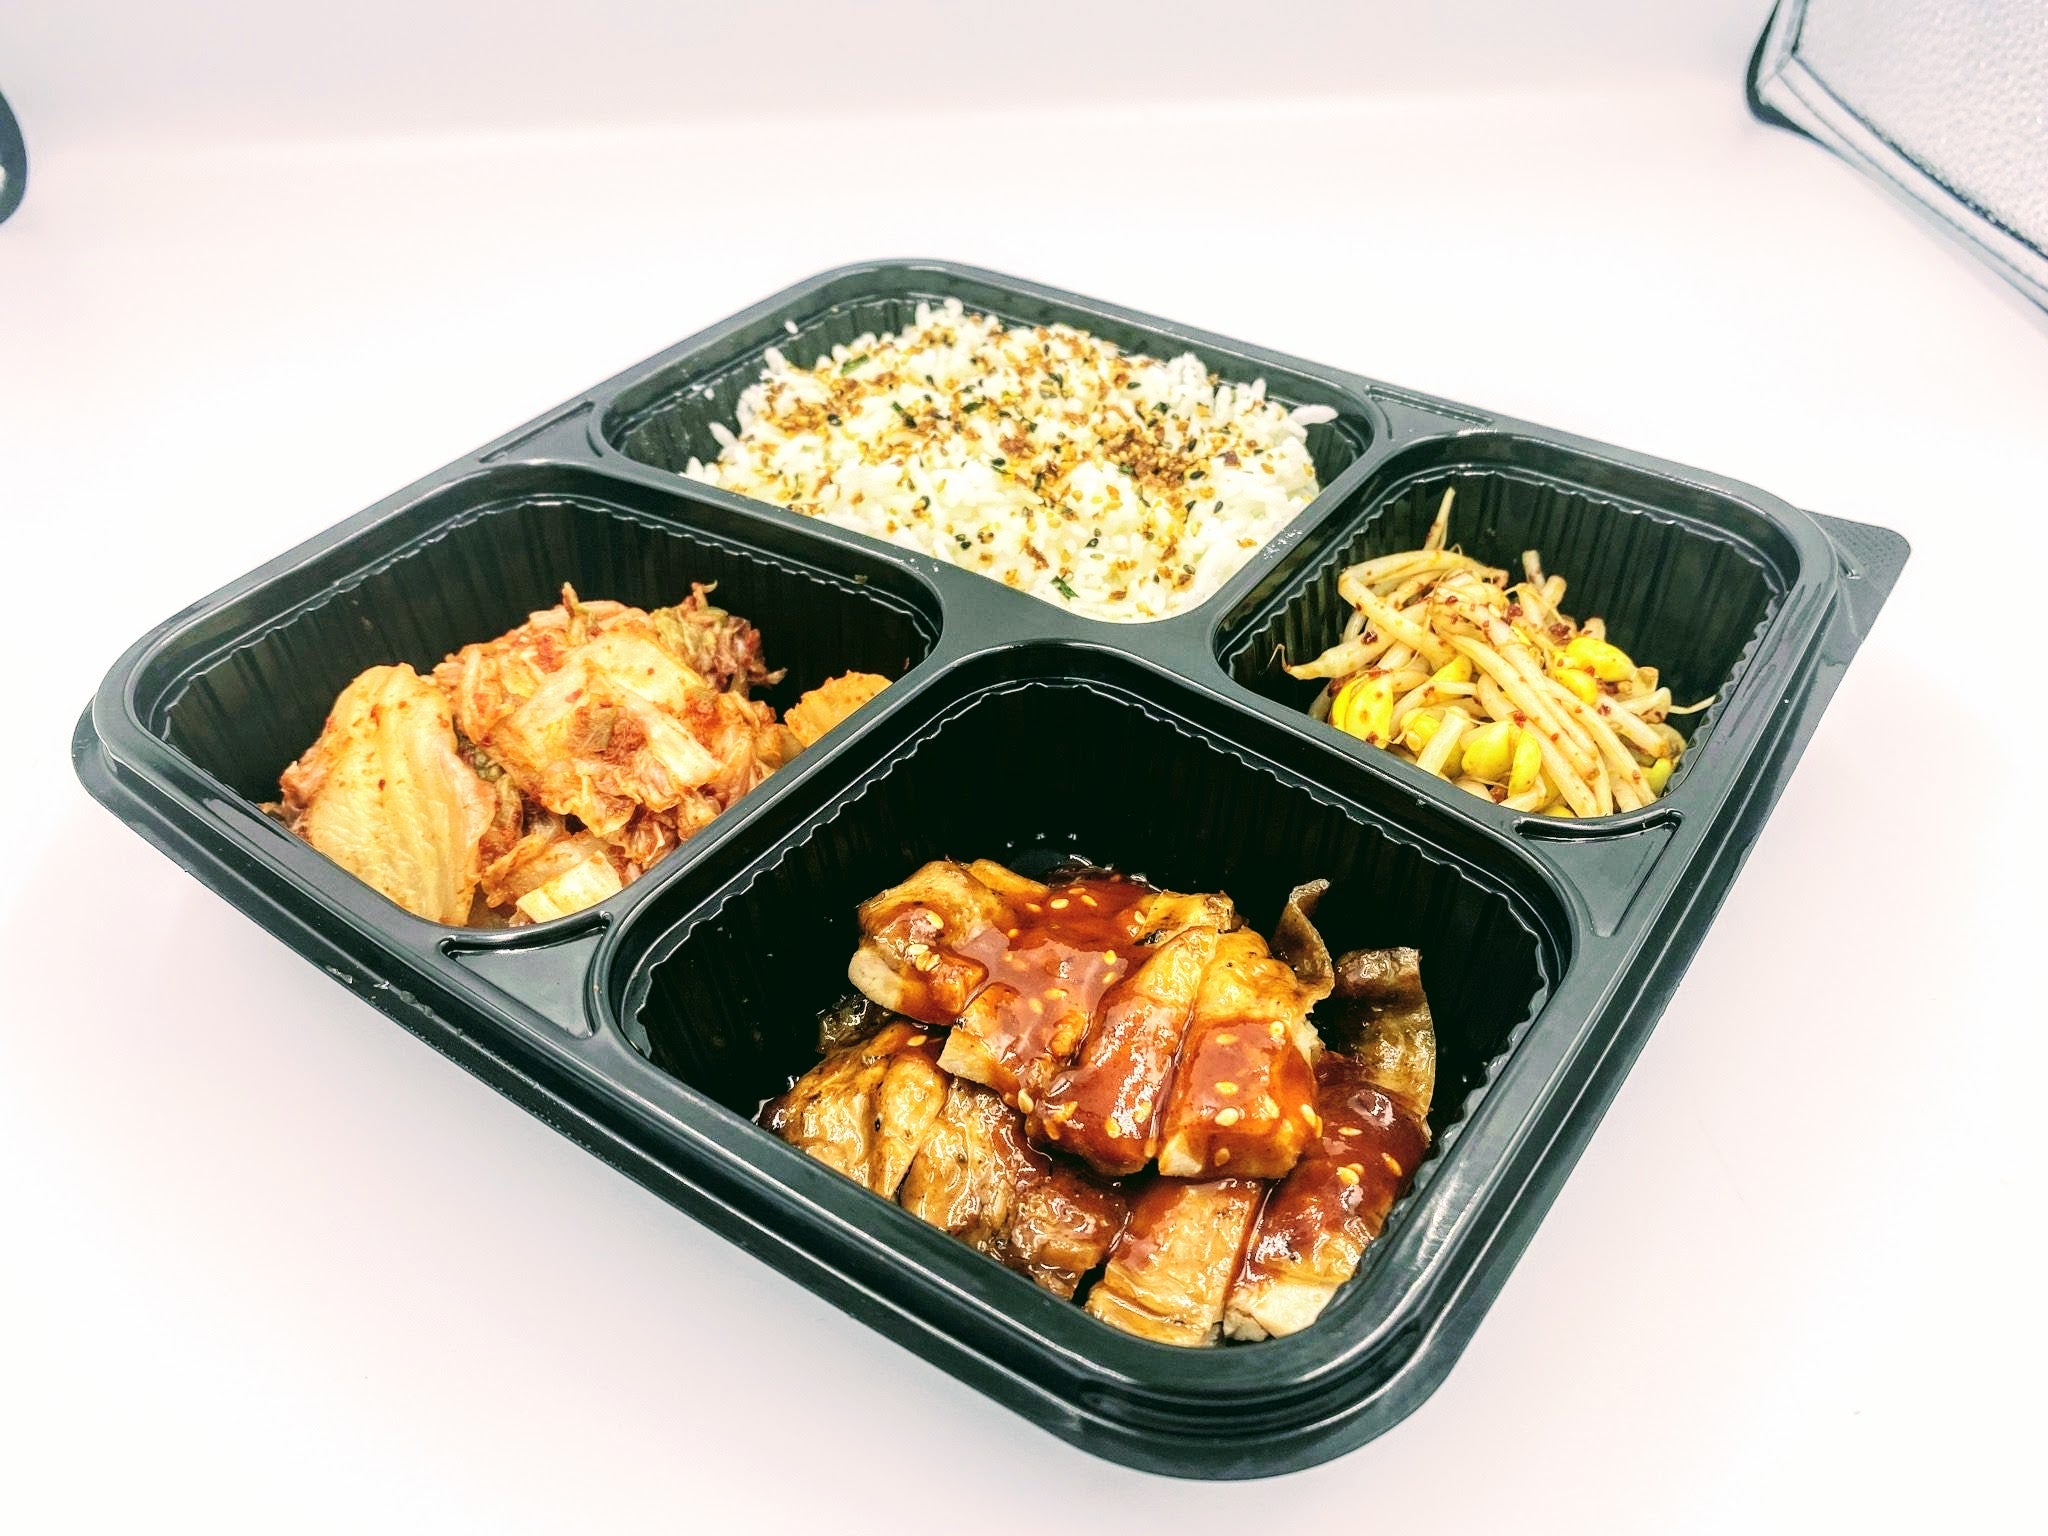 Bento - Kimchi Chicken Set